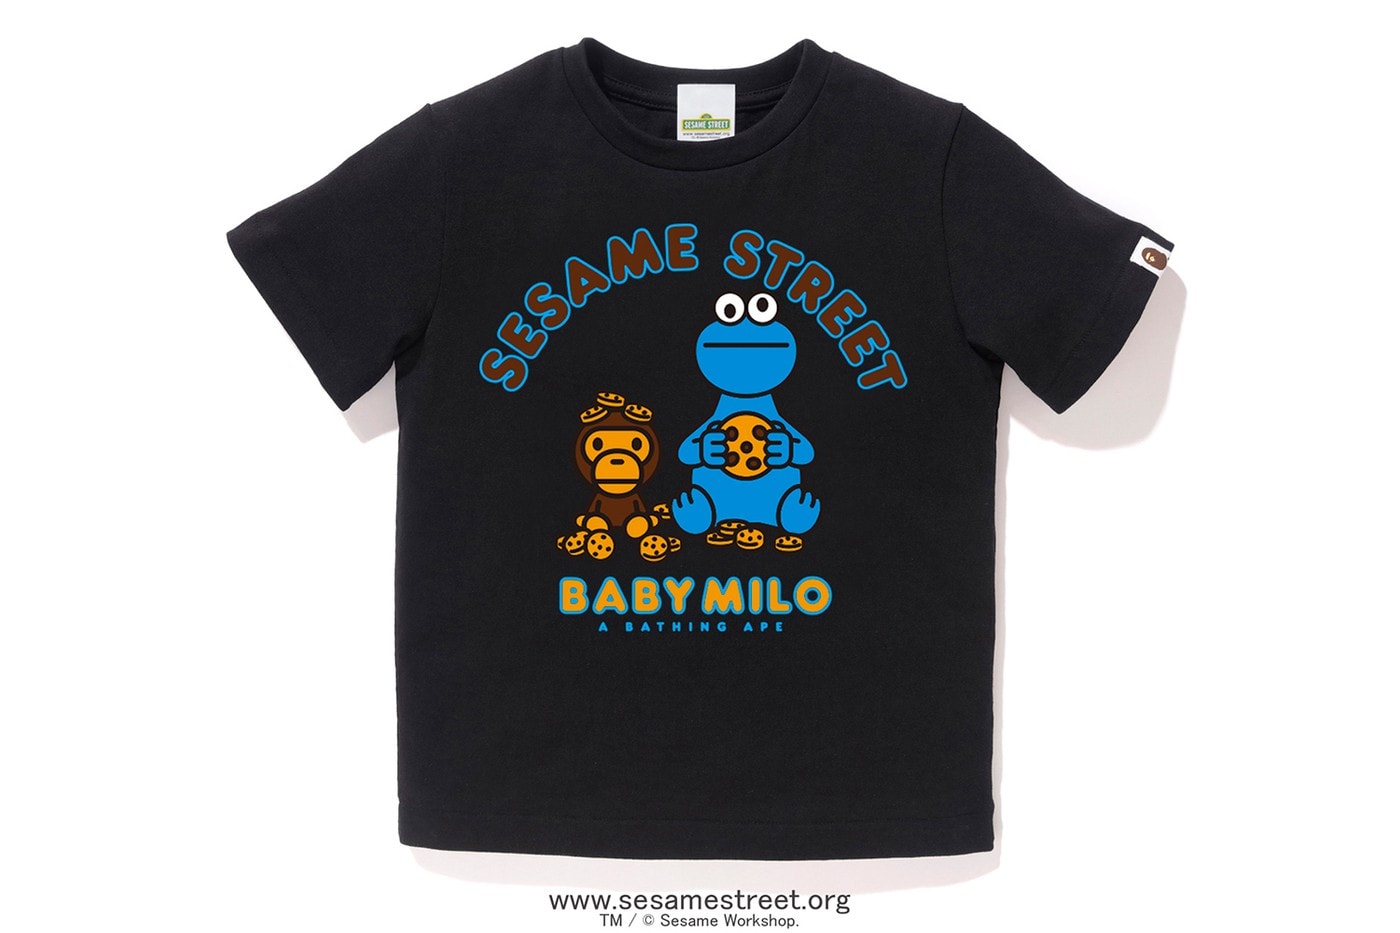 Sesame Street x BAPE Collection Collaboration Release Elmo Cookie Monster Baby Milo Bert Ernie